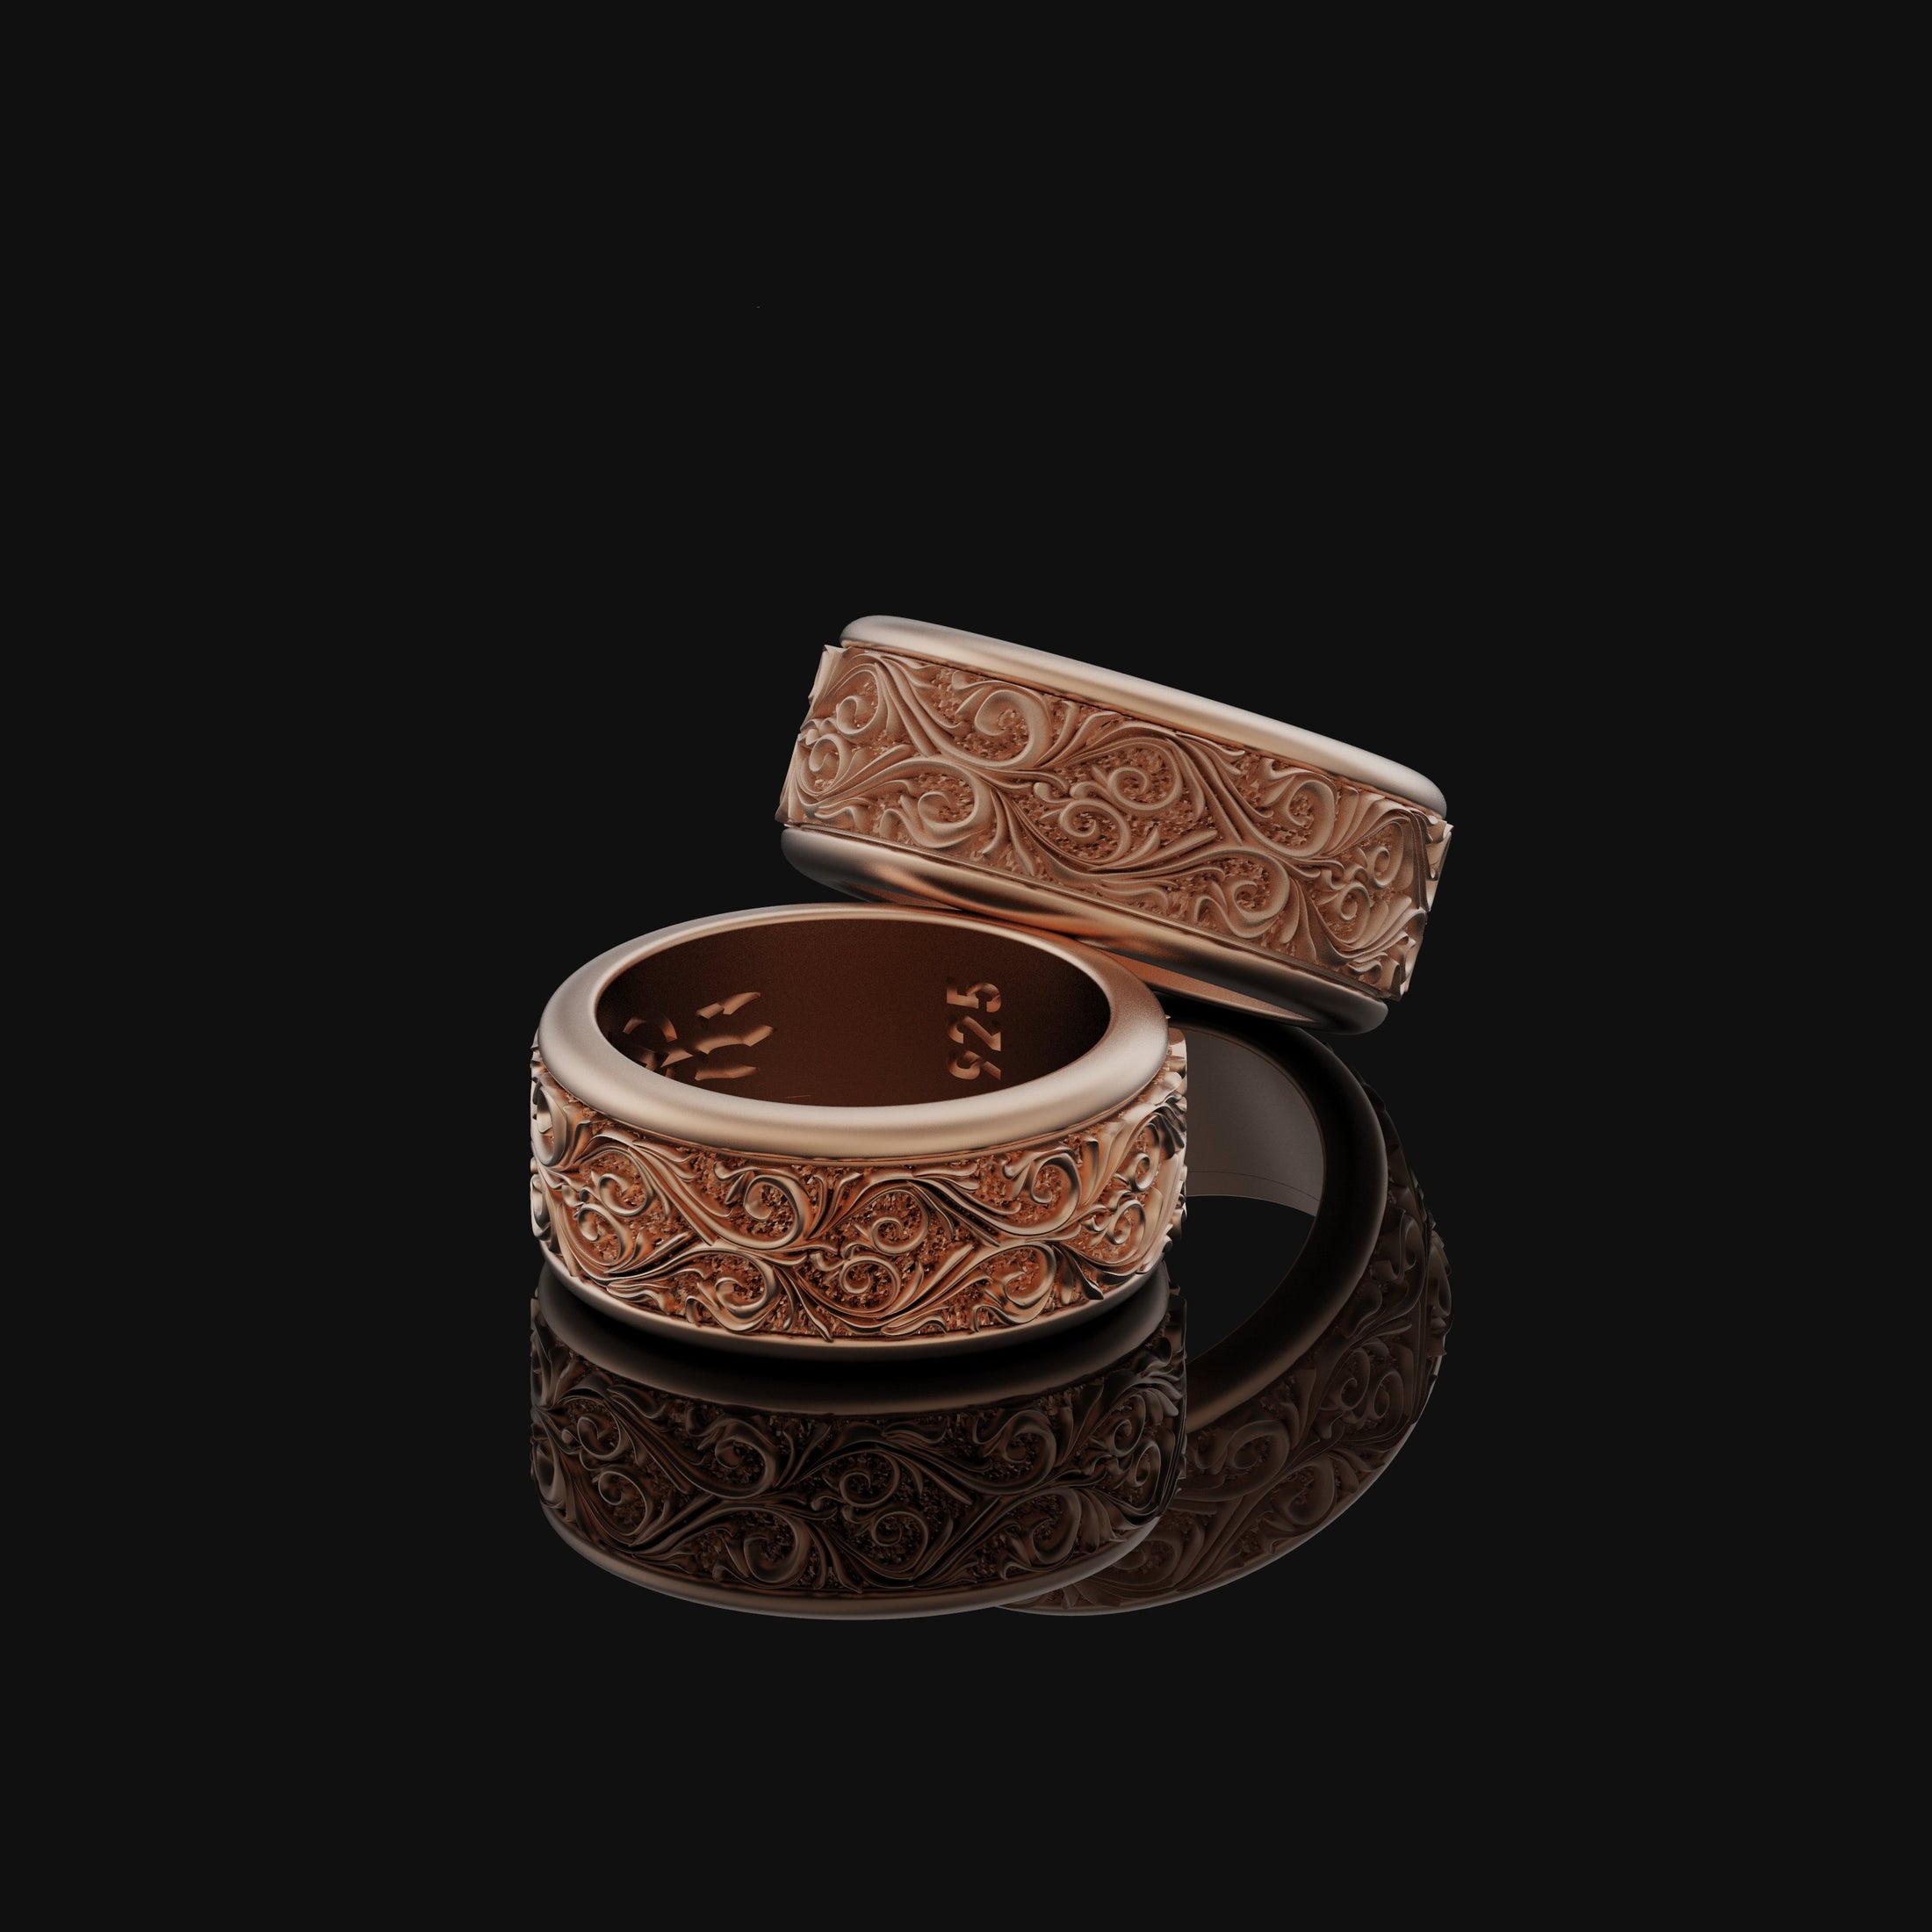 Rotating Floral Wedding Band Ring, Engravable Inside, Elegant Blossom Design, Unique Bridal Jewelry